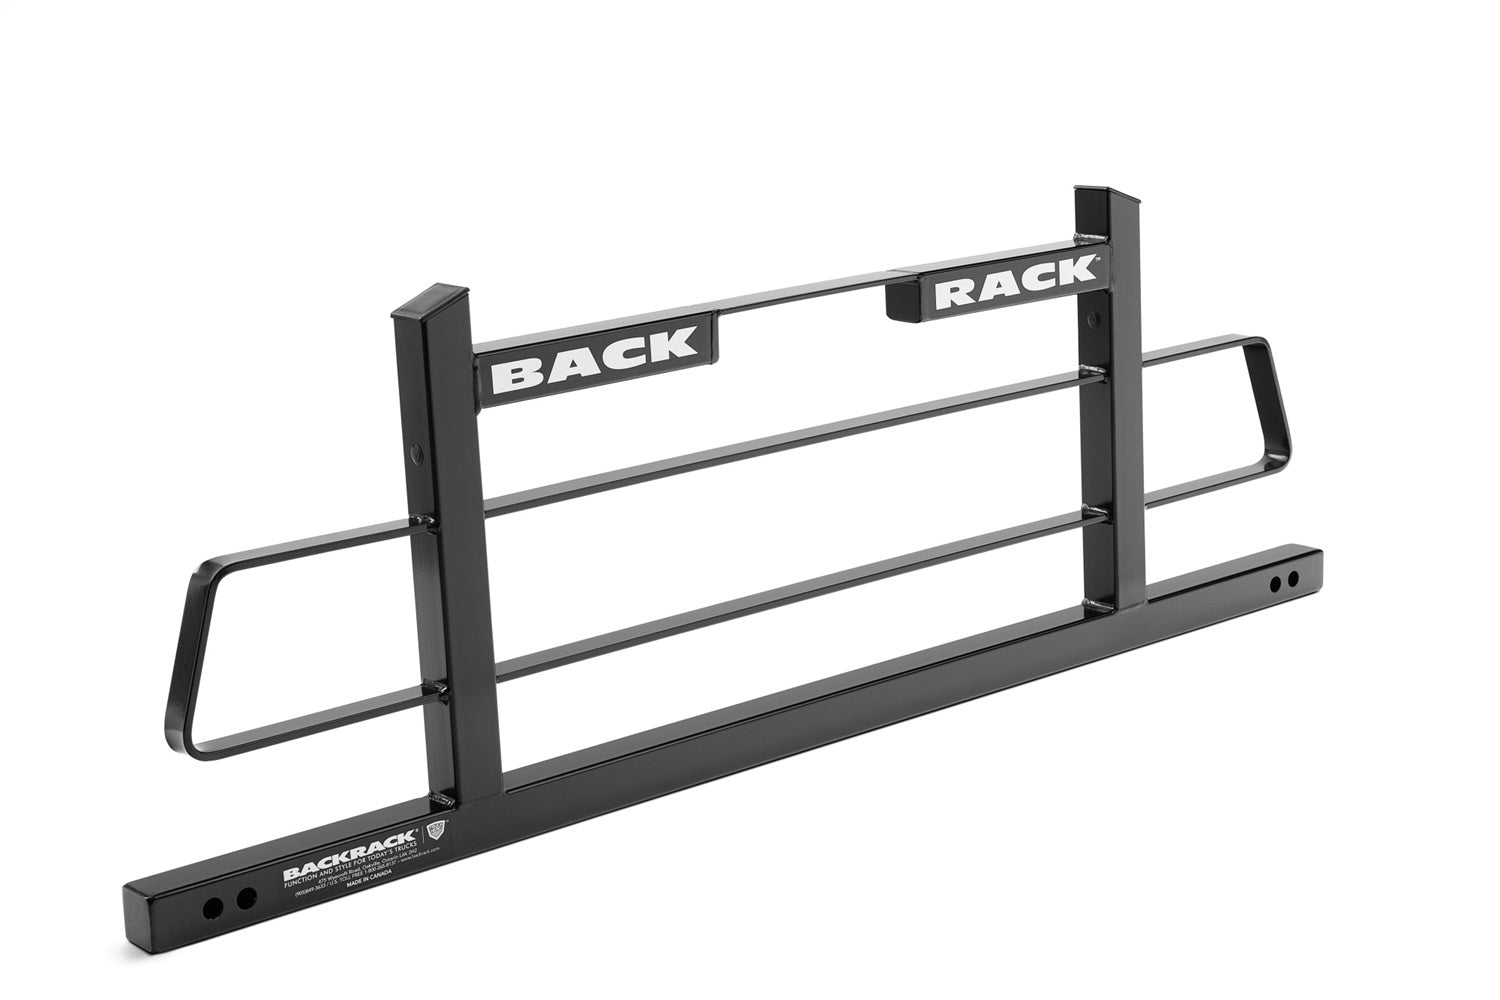 Backrack 15029 Backrack Headache Rack Frame